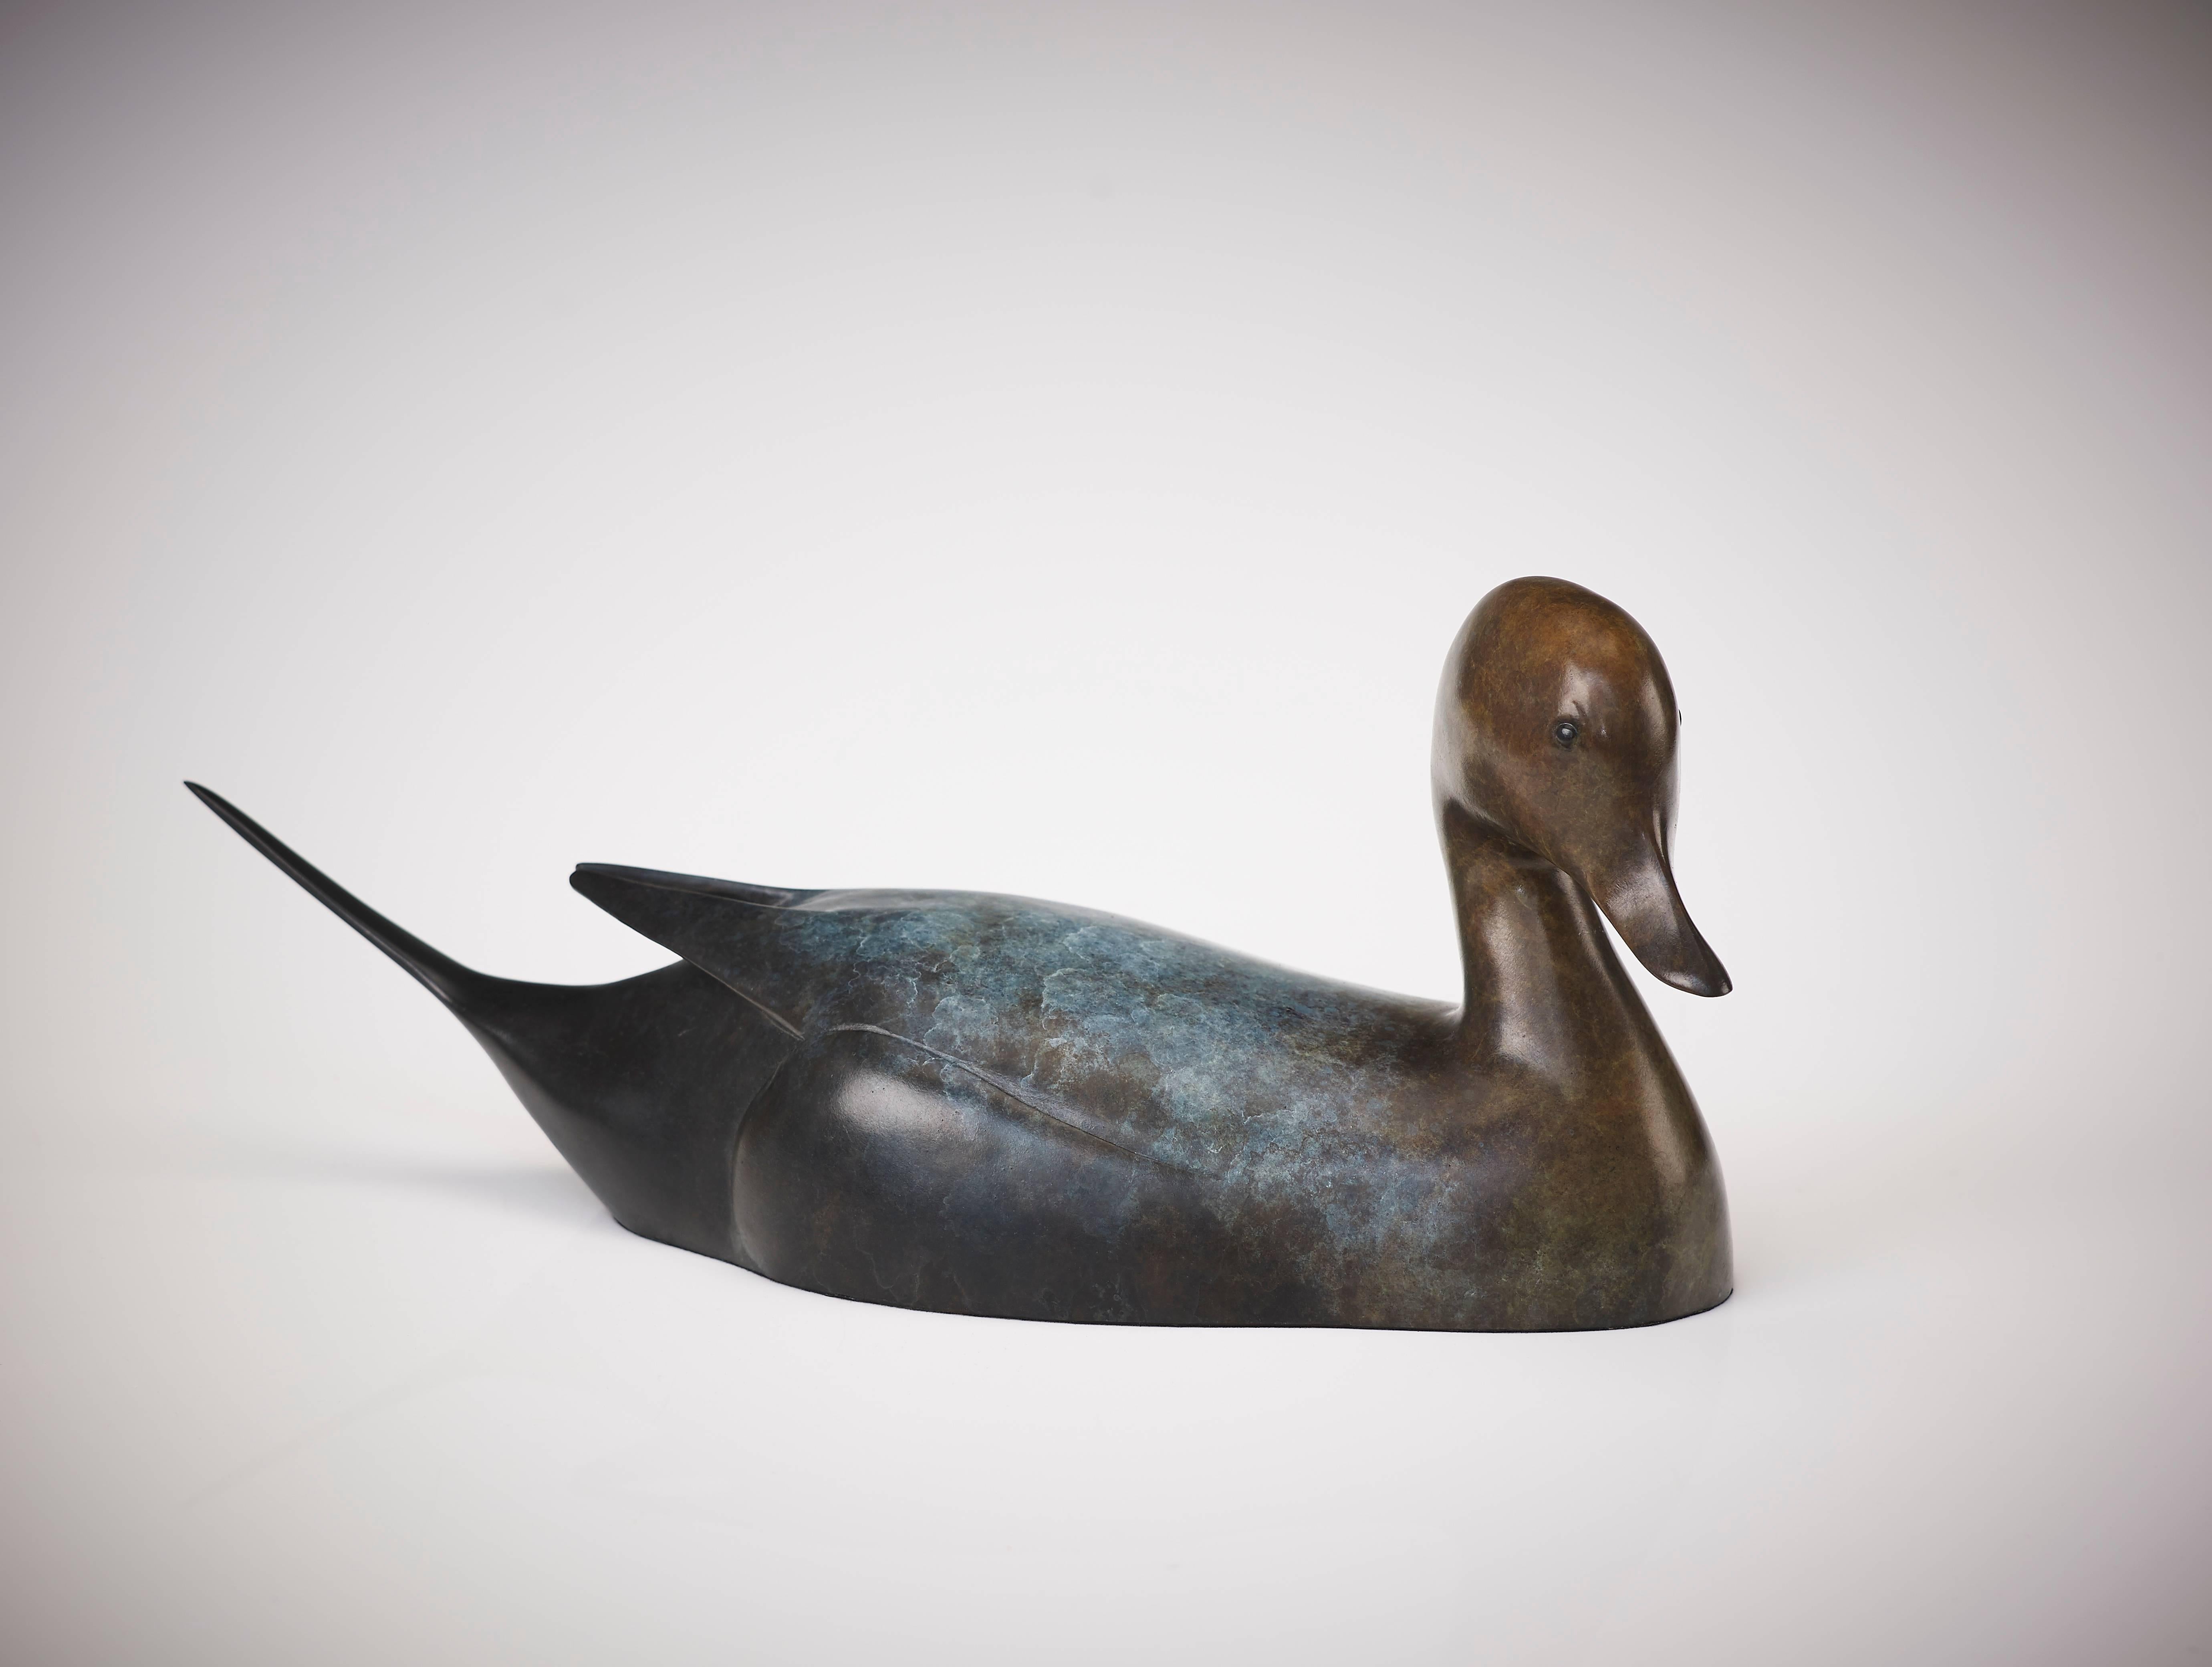 Richard Smith b.1955 Still-Life Sculpture - 'Pintail Drake' British Wildlife & Nature Bronze Sculpture of a water duck